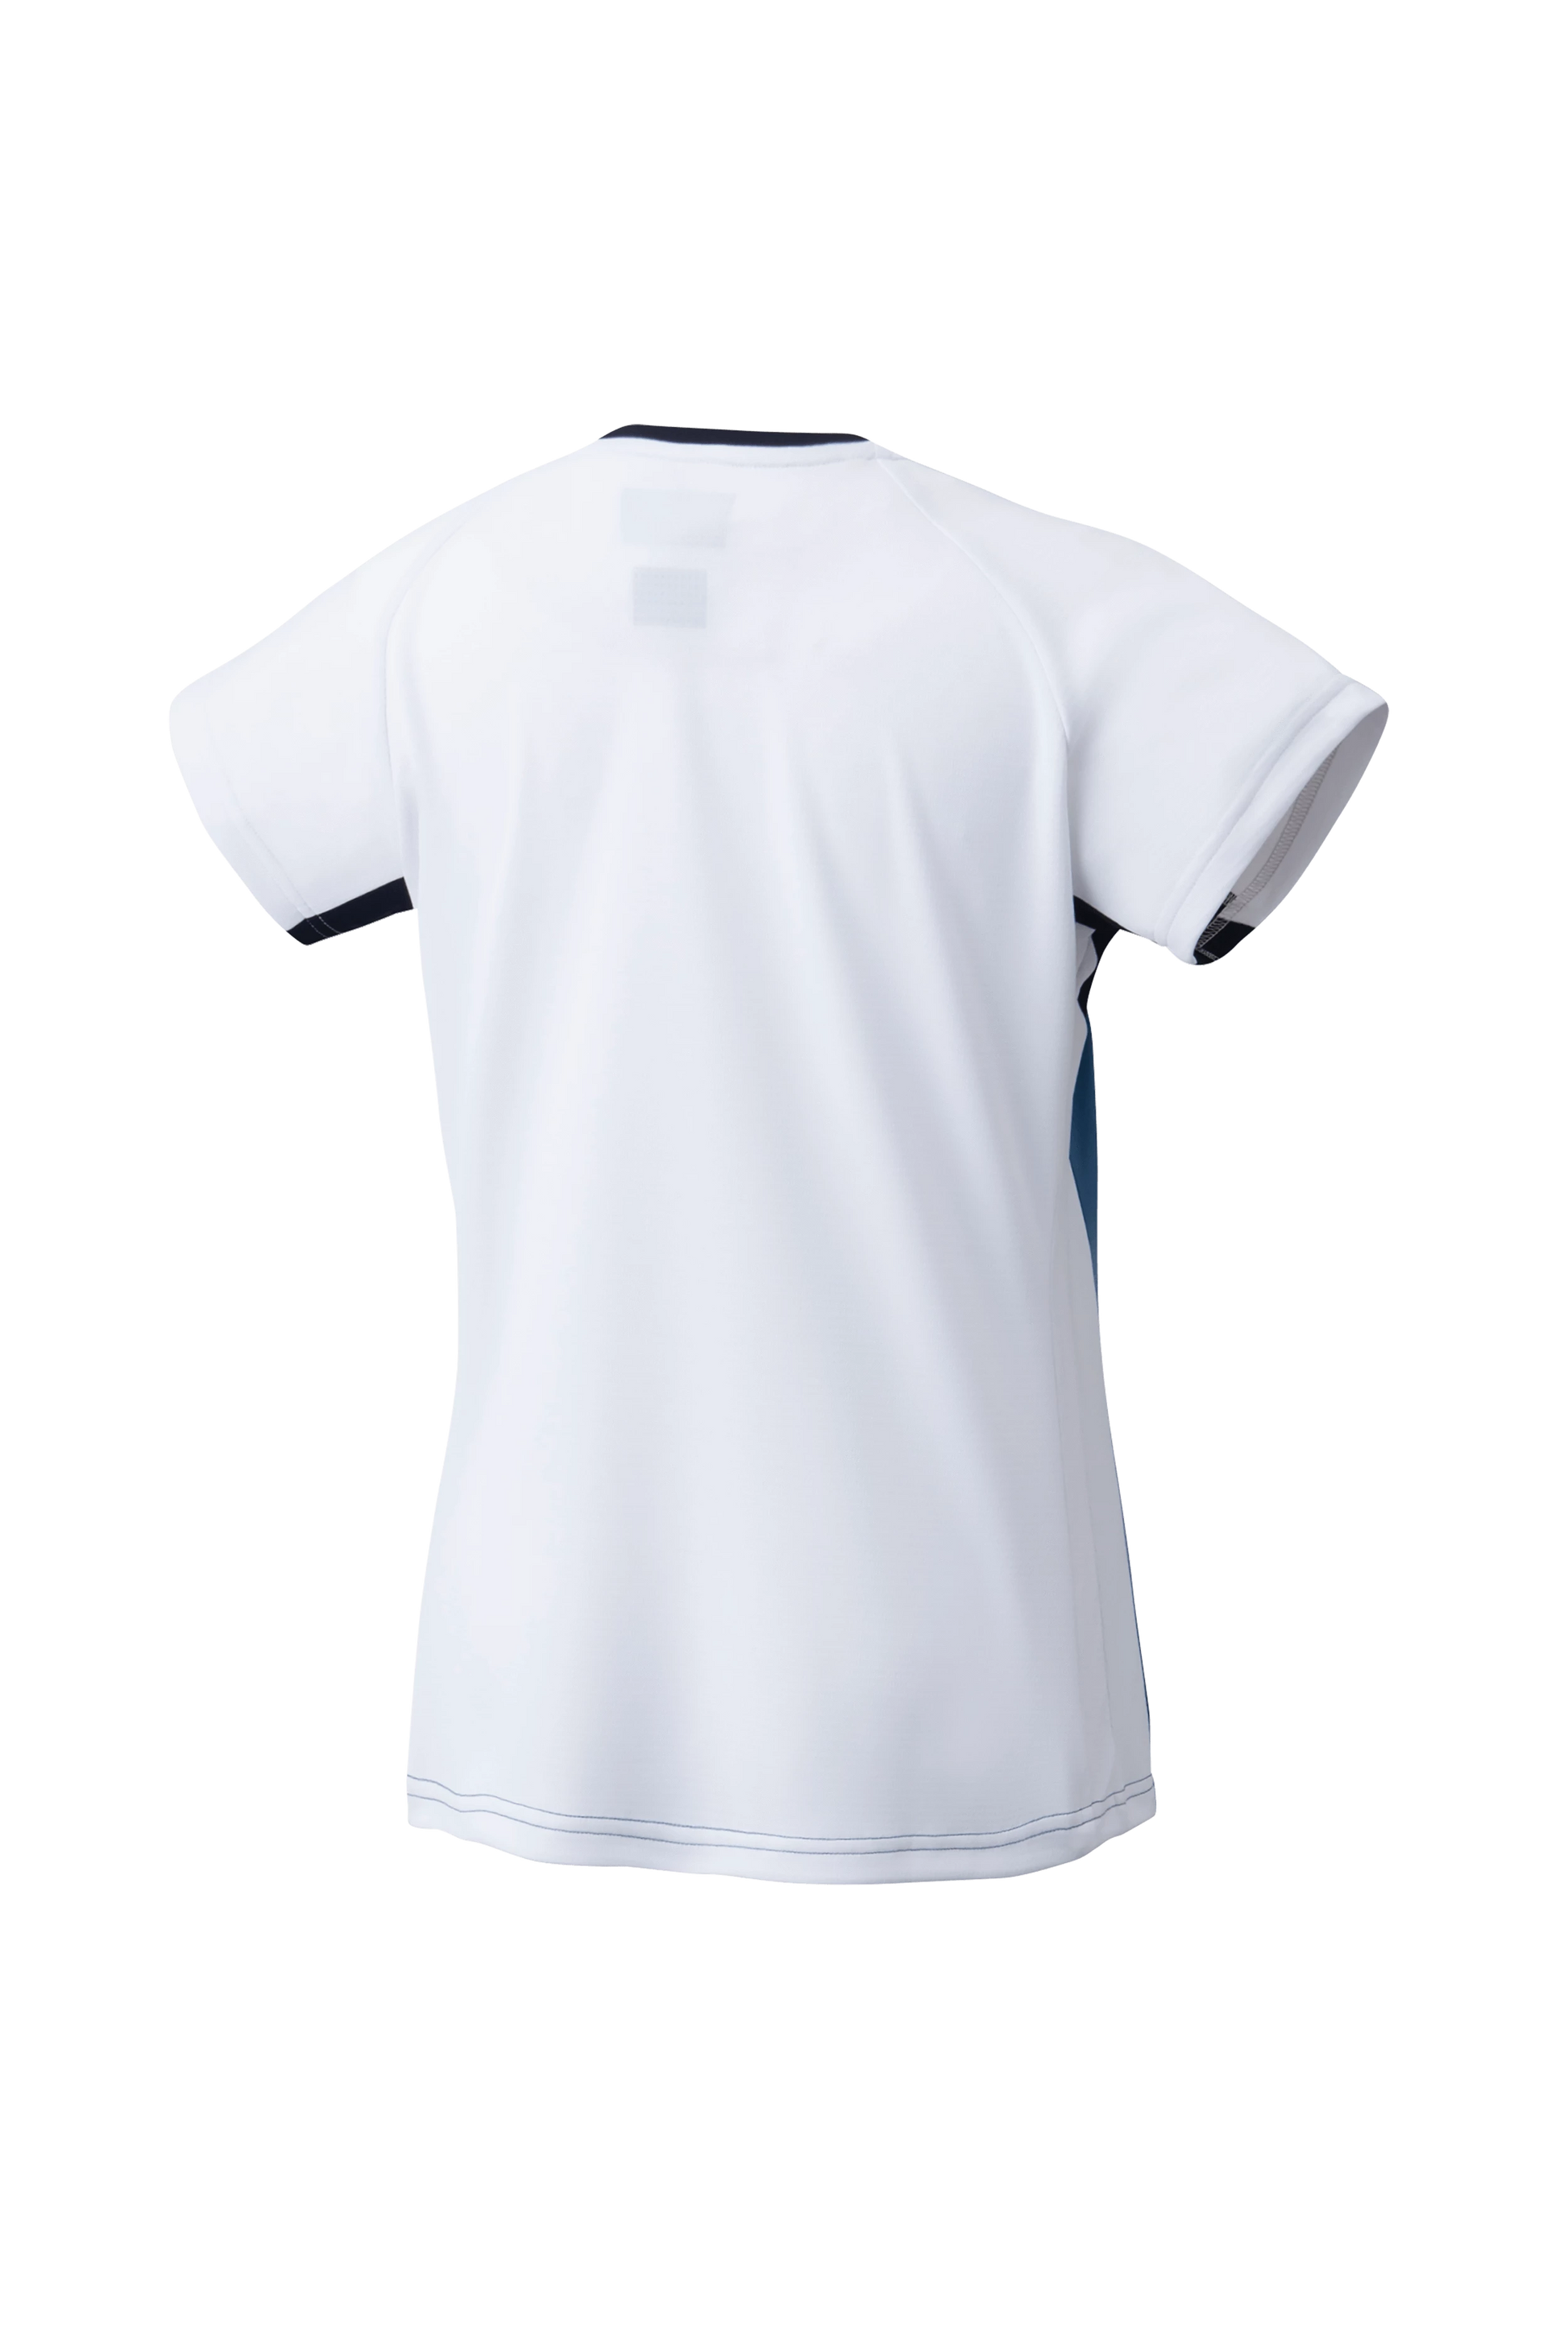 Yonex Women's Tournament Shirt 20641 (White)